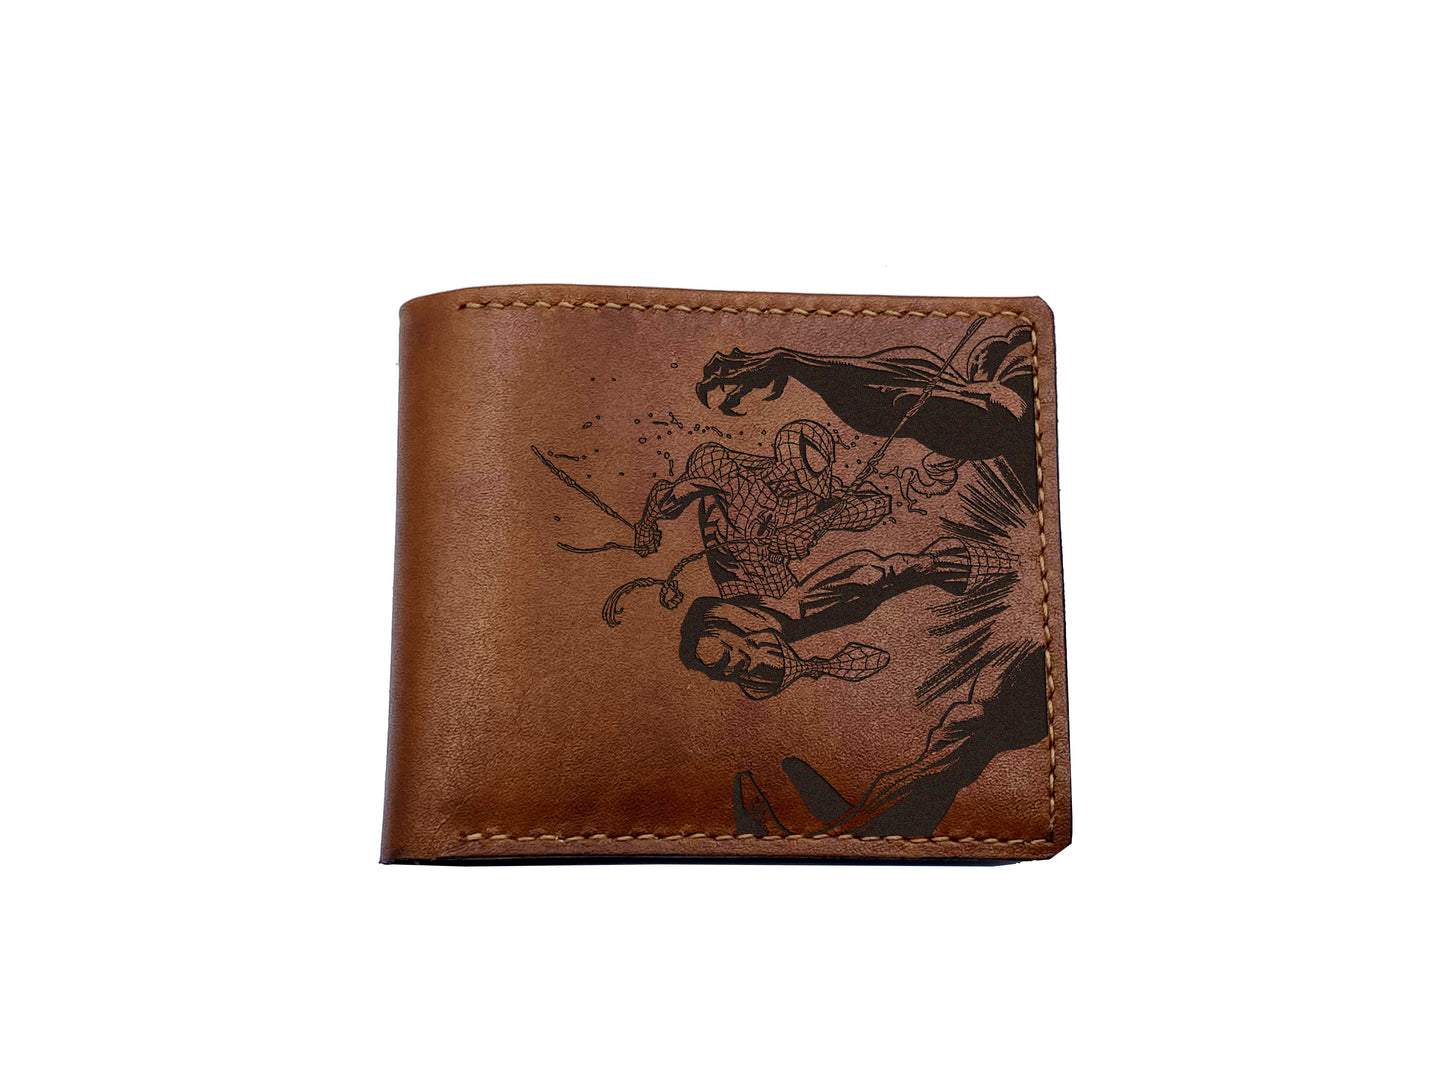 Spiderman fighting venom leather handmade wallet, custom superheroes gift ideas, Spiderman wallet for boyfriend, gift for husband, father